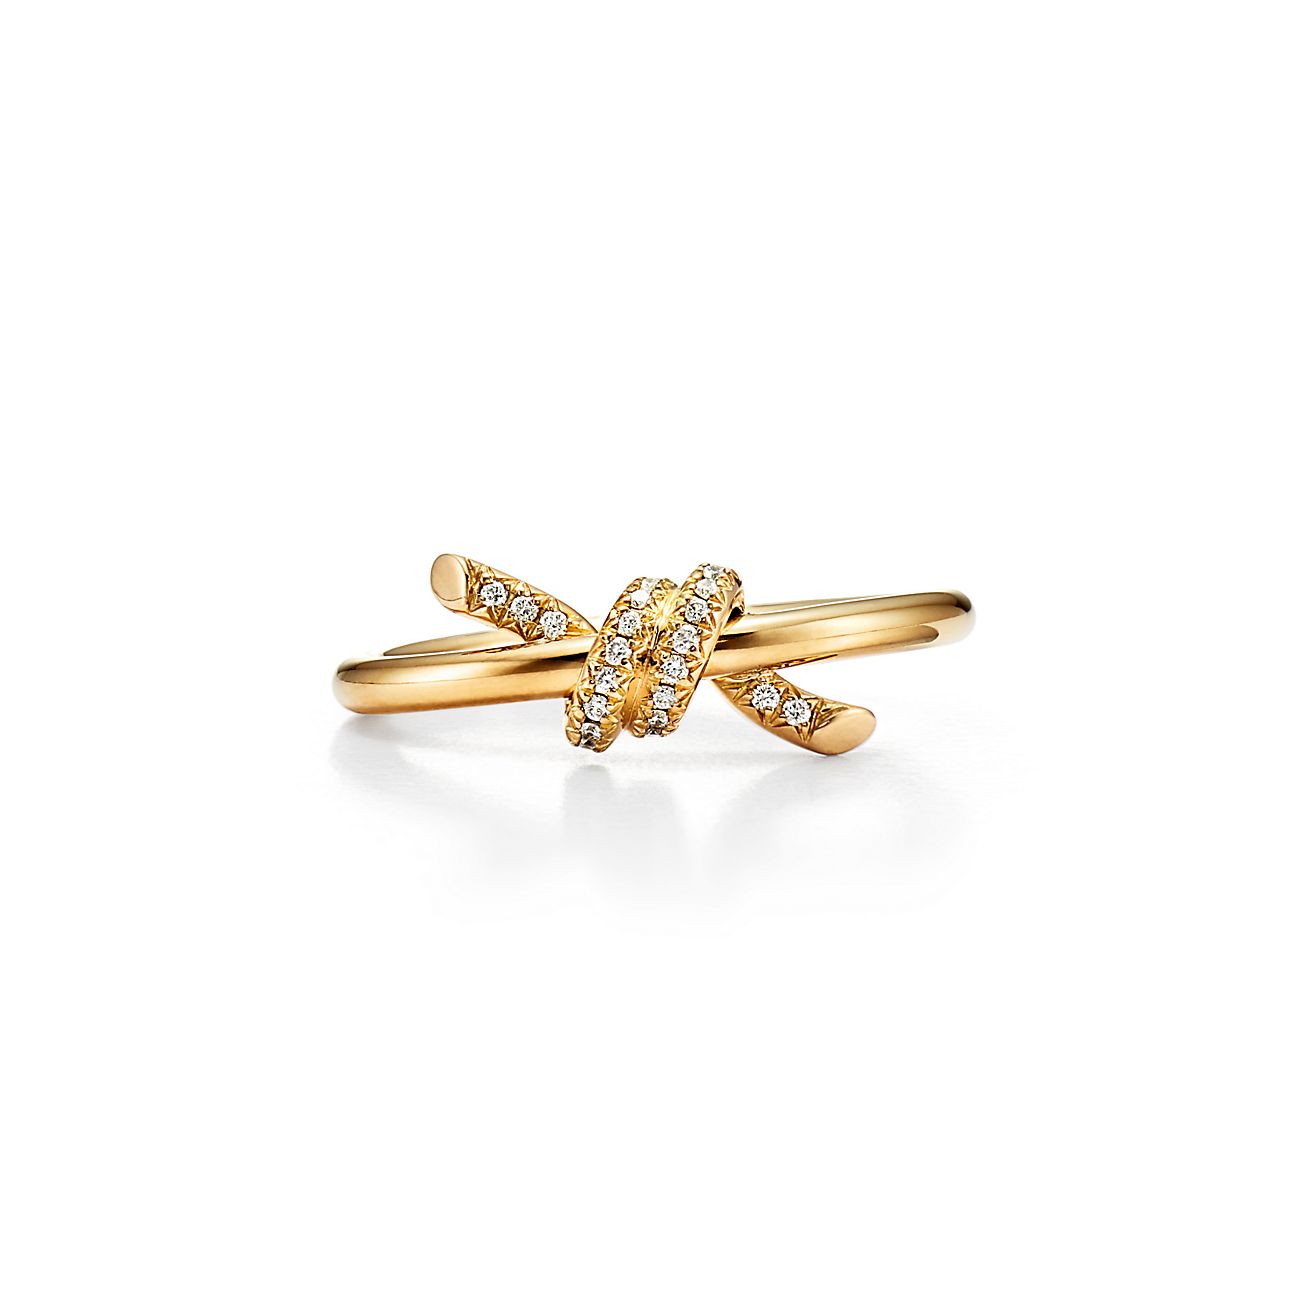 Bague Tiffany Knot en or jaune 18 carats et diamants - Size 4 Tiffany & Co.